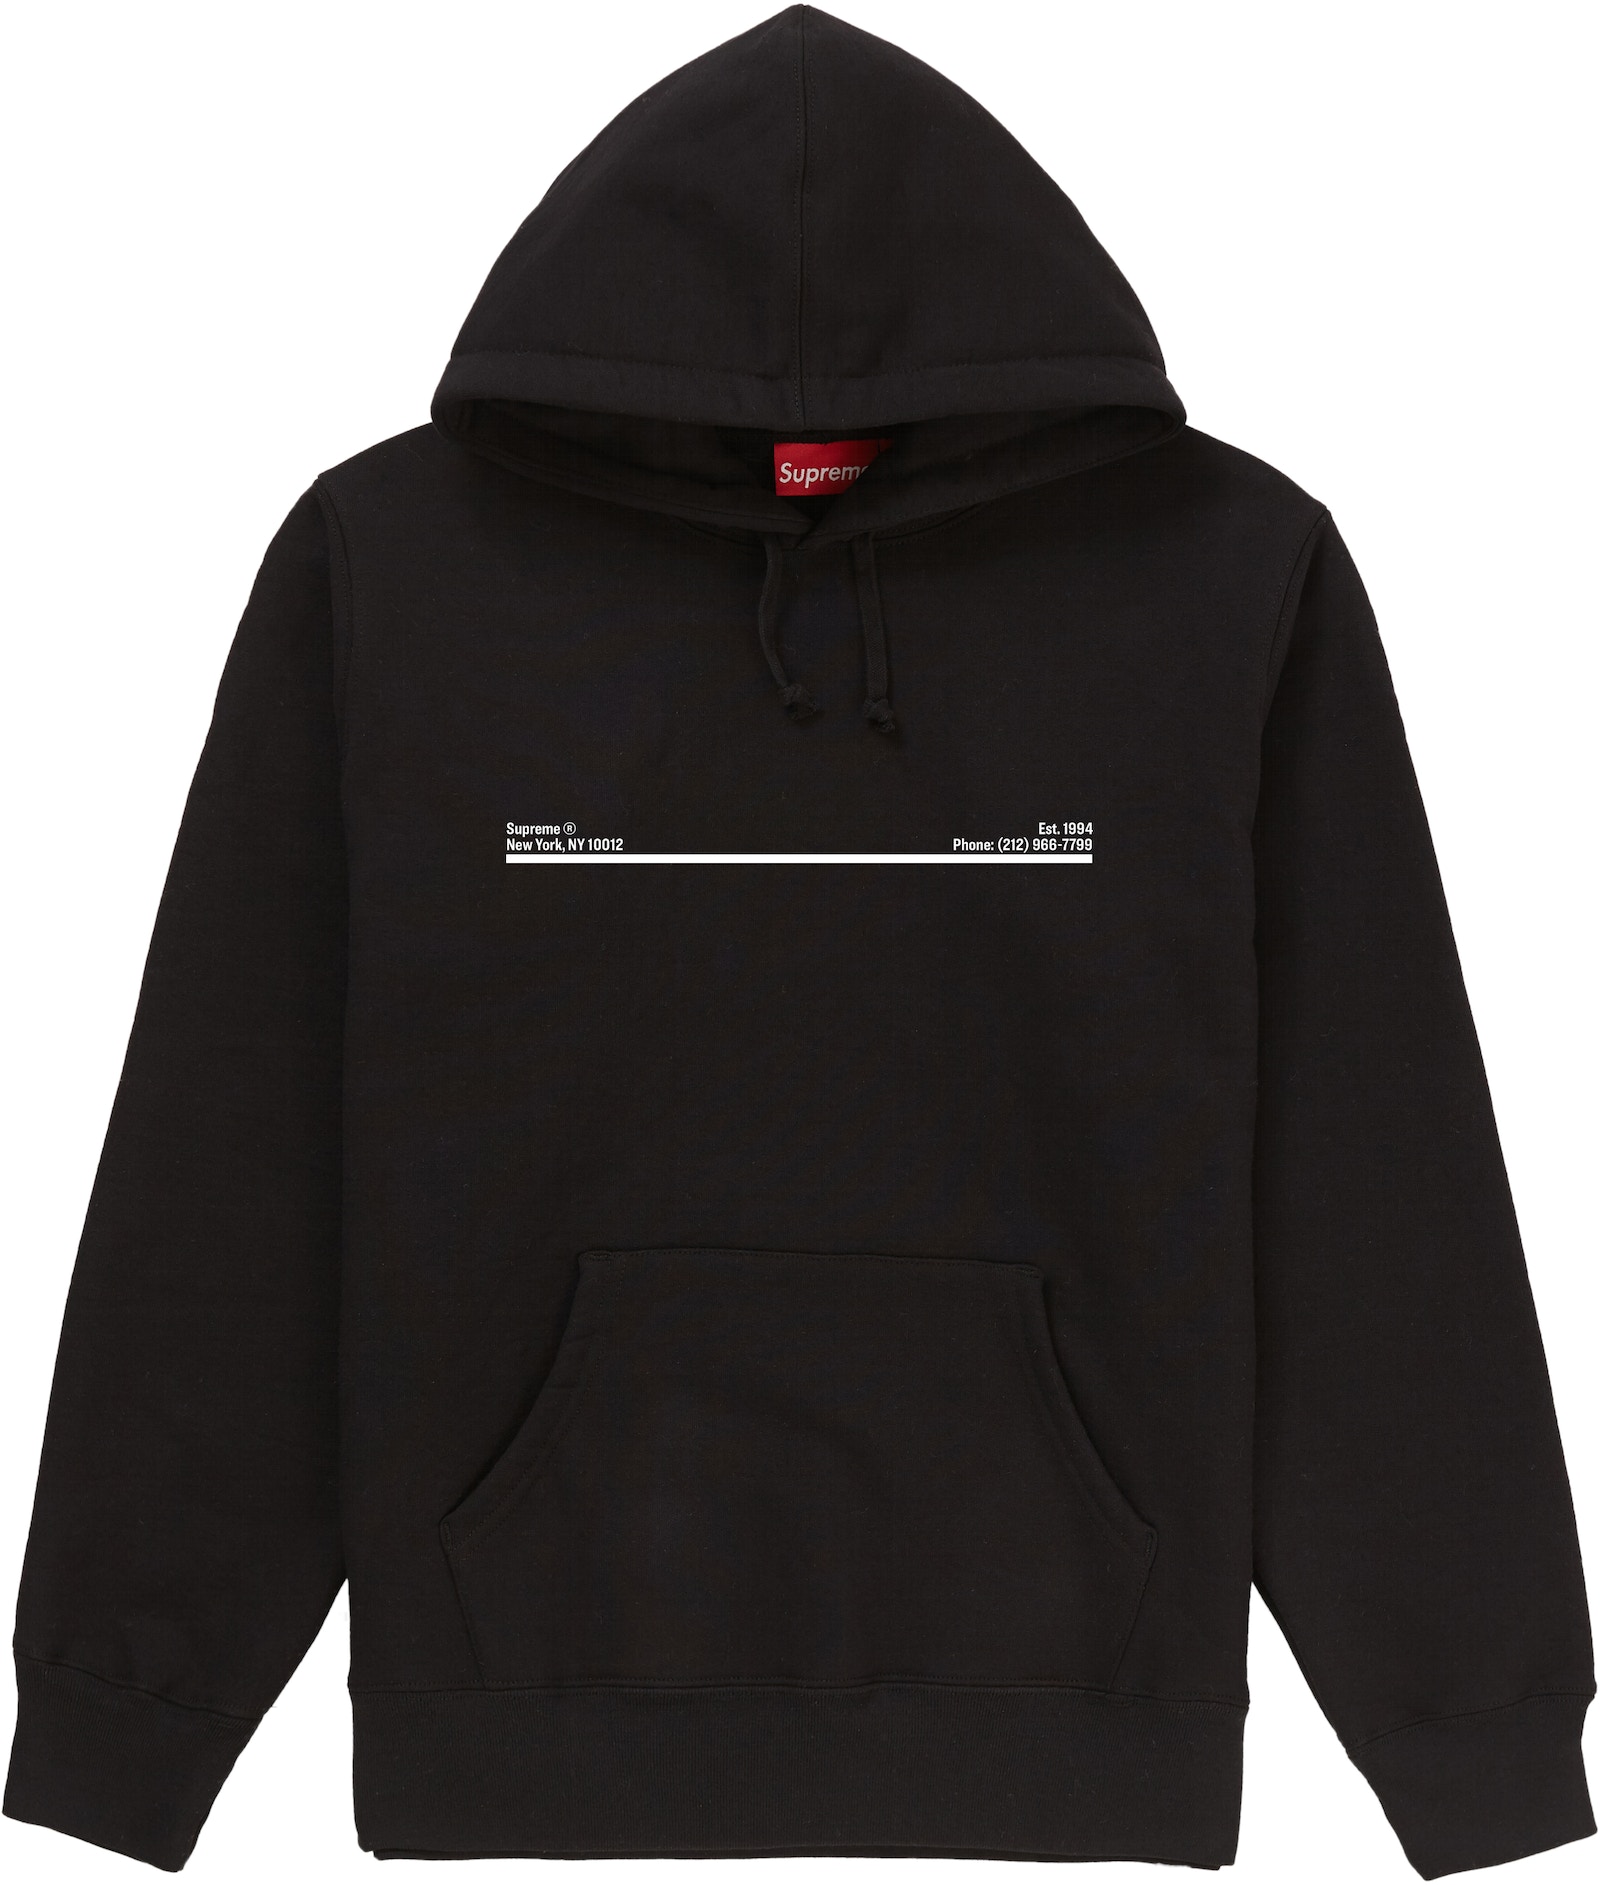 Supreme Shop Hooded Sweatshirt Black New York City - FW20